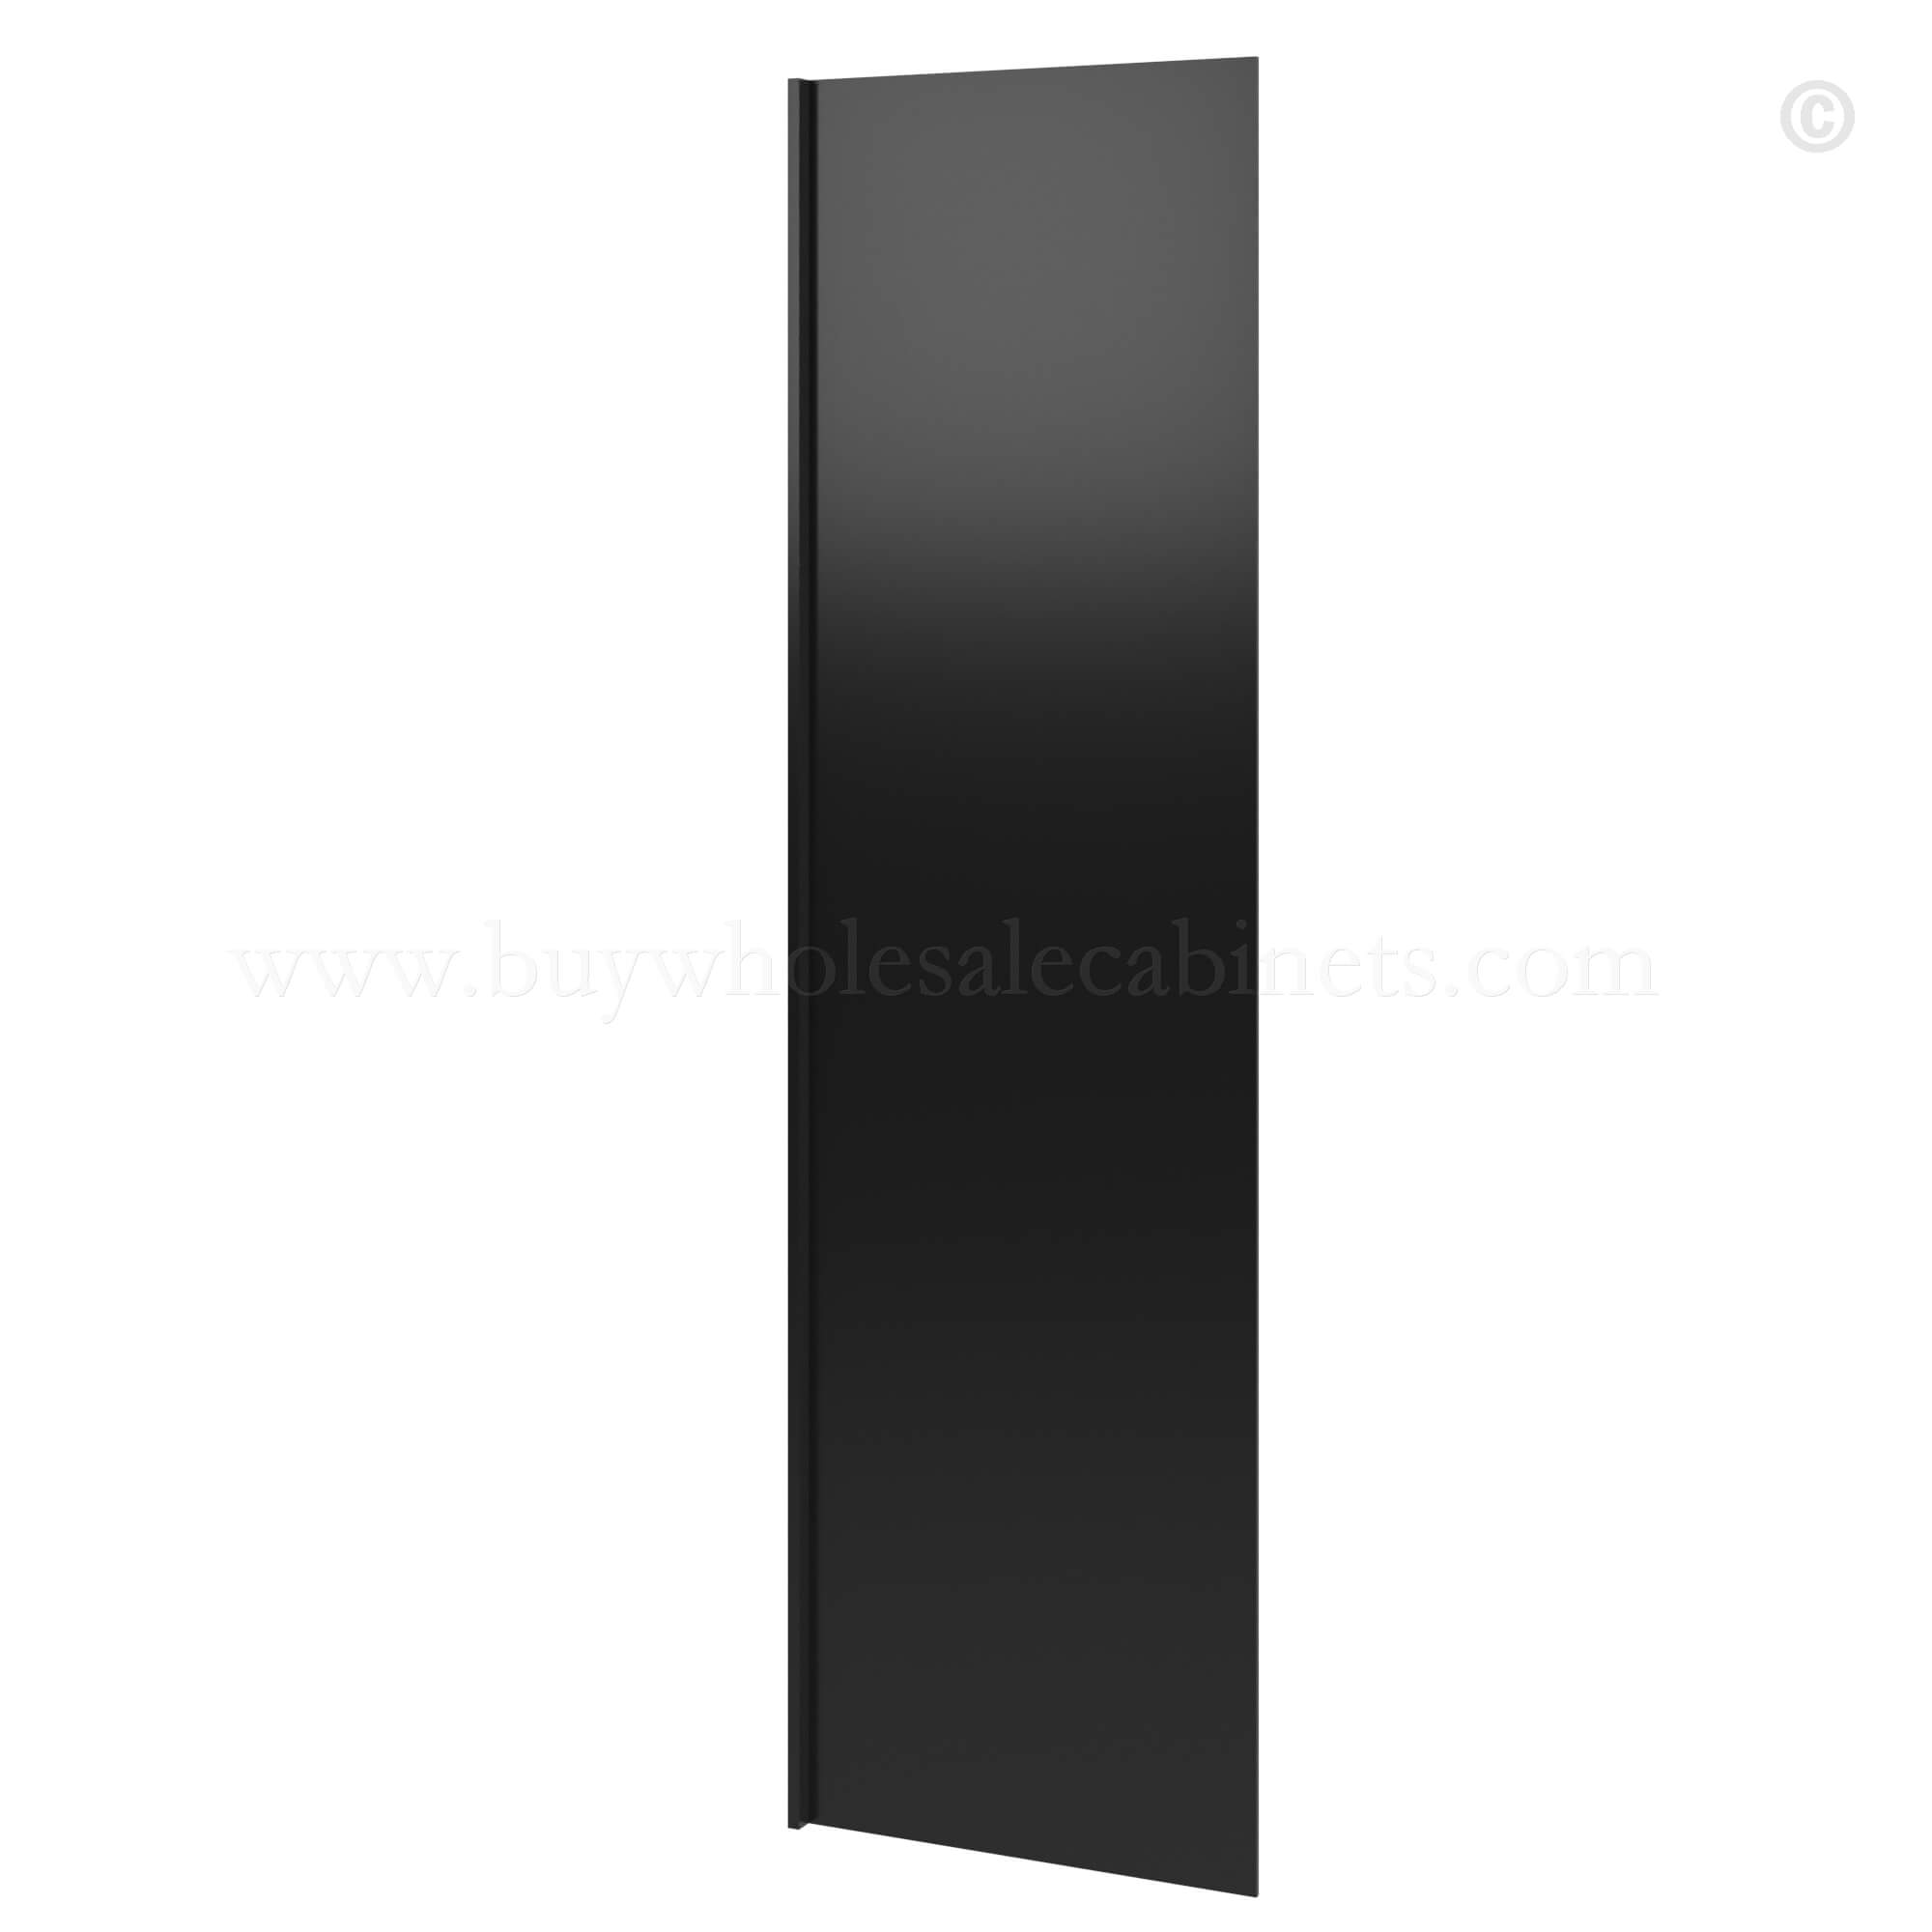 Black Shaker Refrigerator Return Panel, rta cabinets, wholesale cabinets